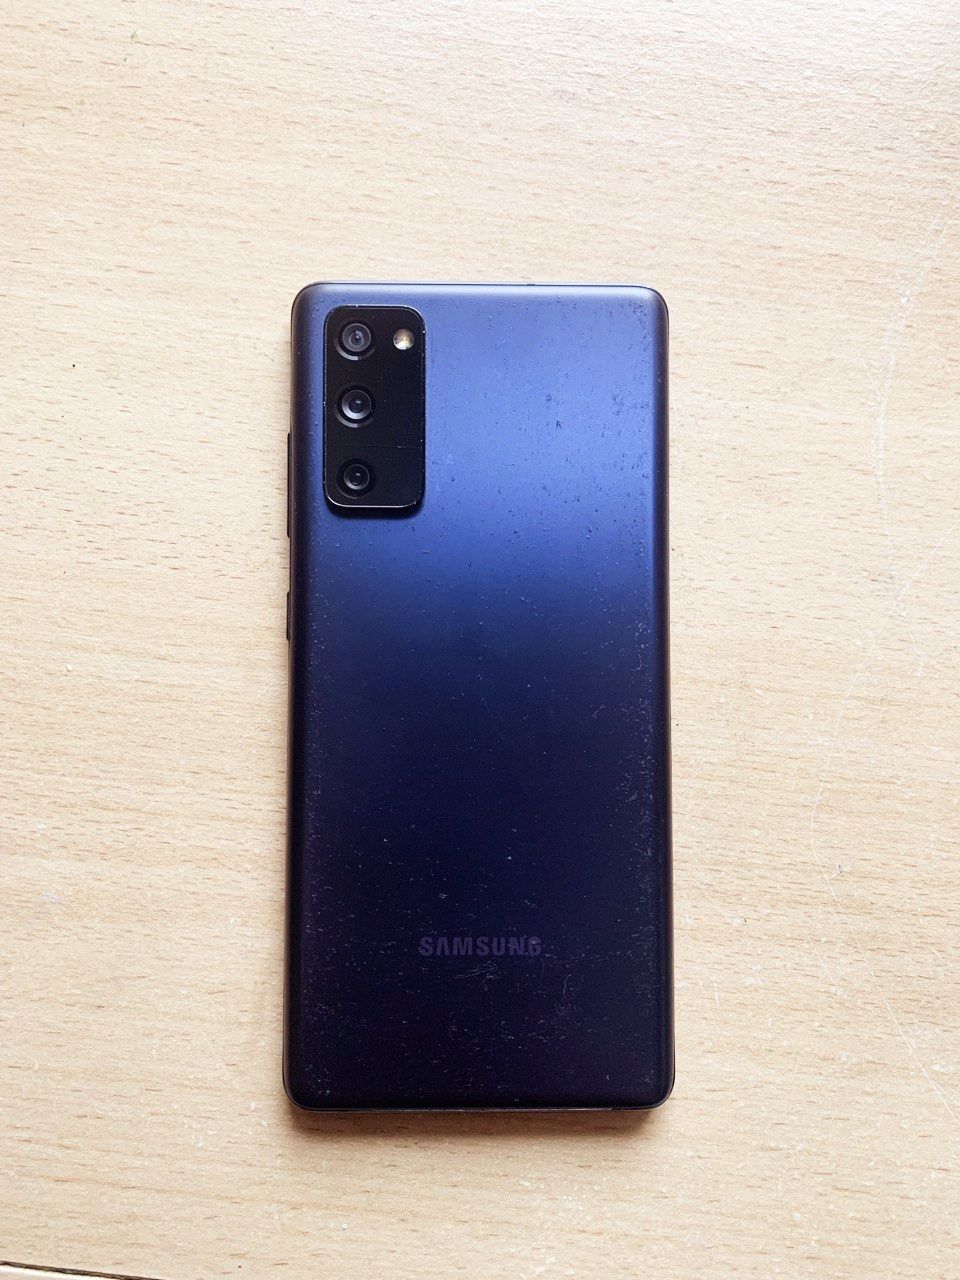 Samsung S20 FE snapdragon